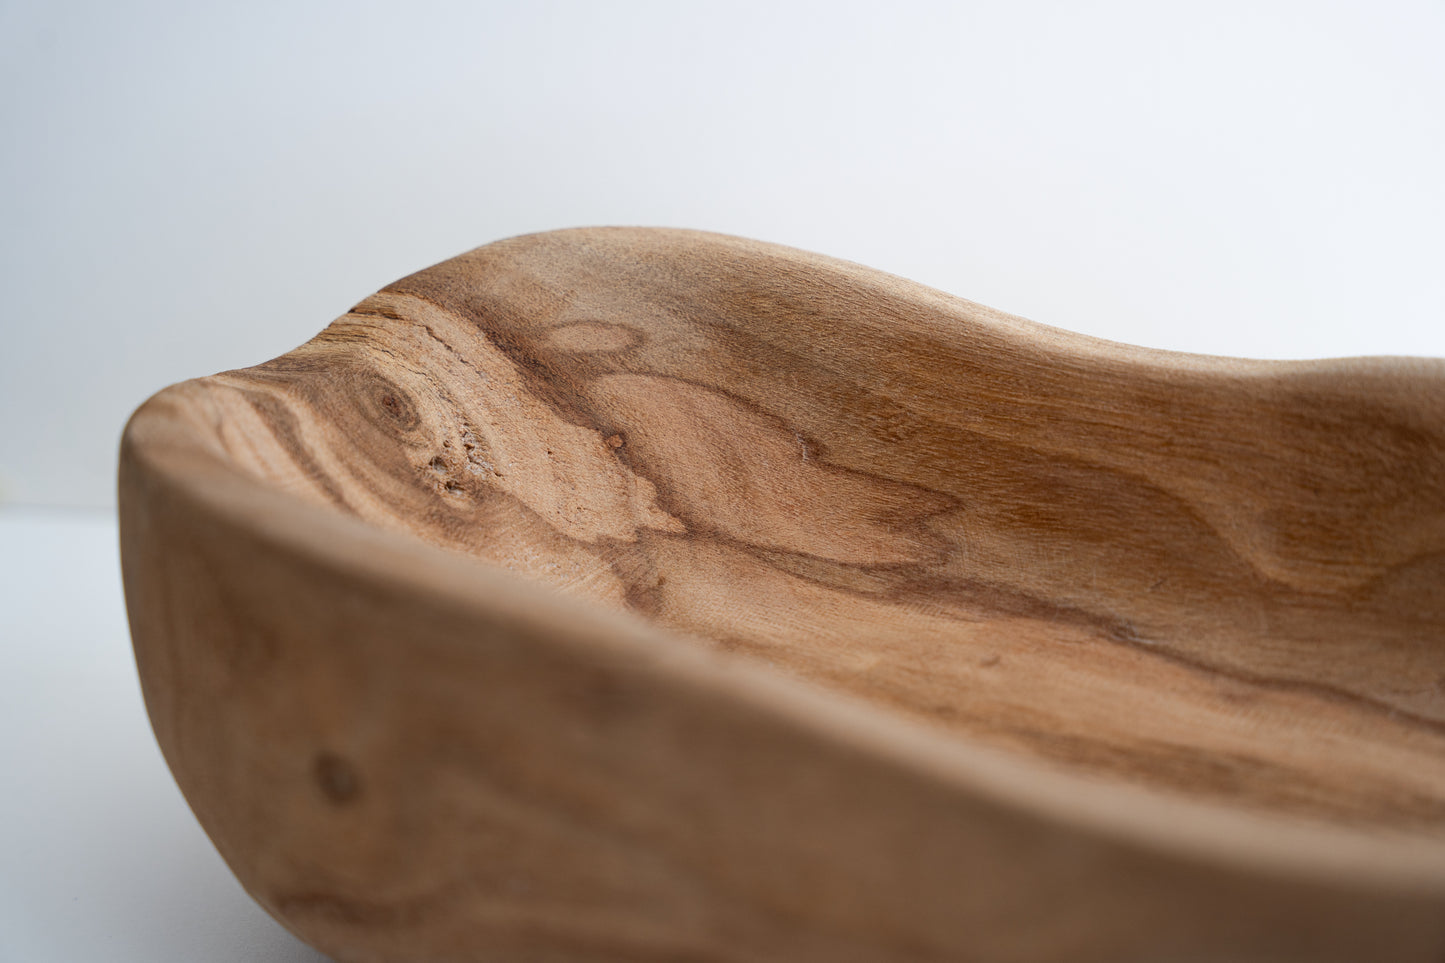 Long wooden bowl